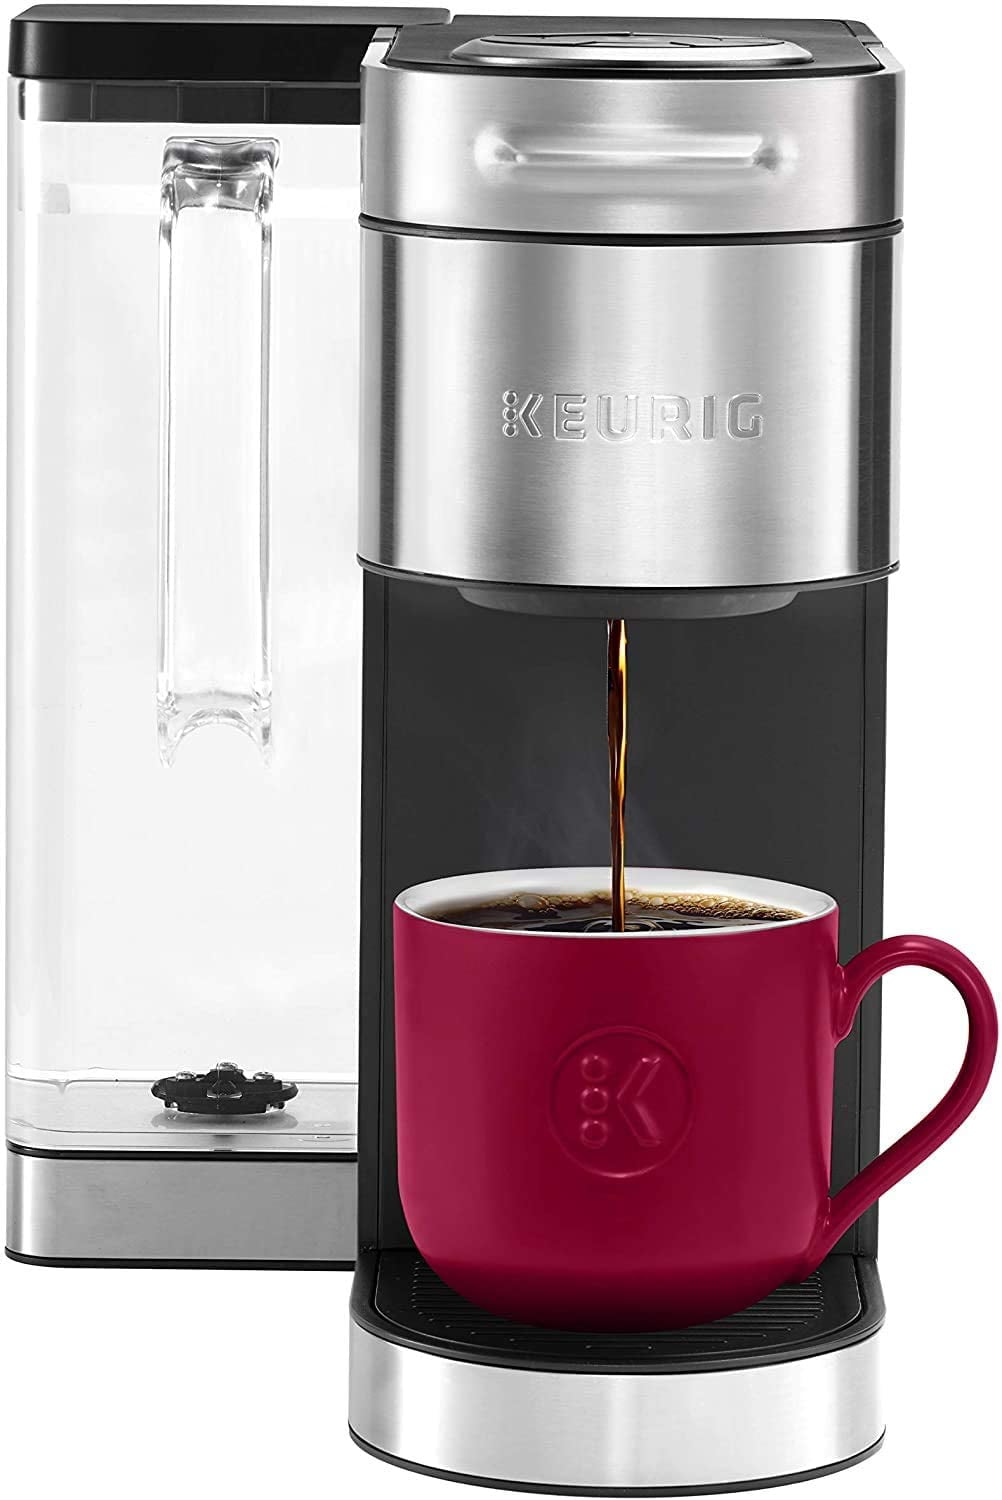 Keurig Supreme Plus Single Serve Coffee Maker Bundle Walmart com